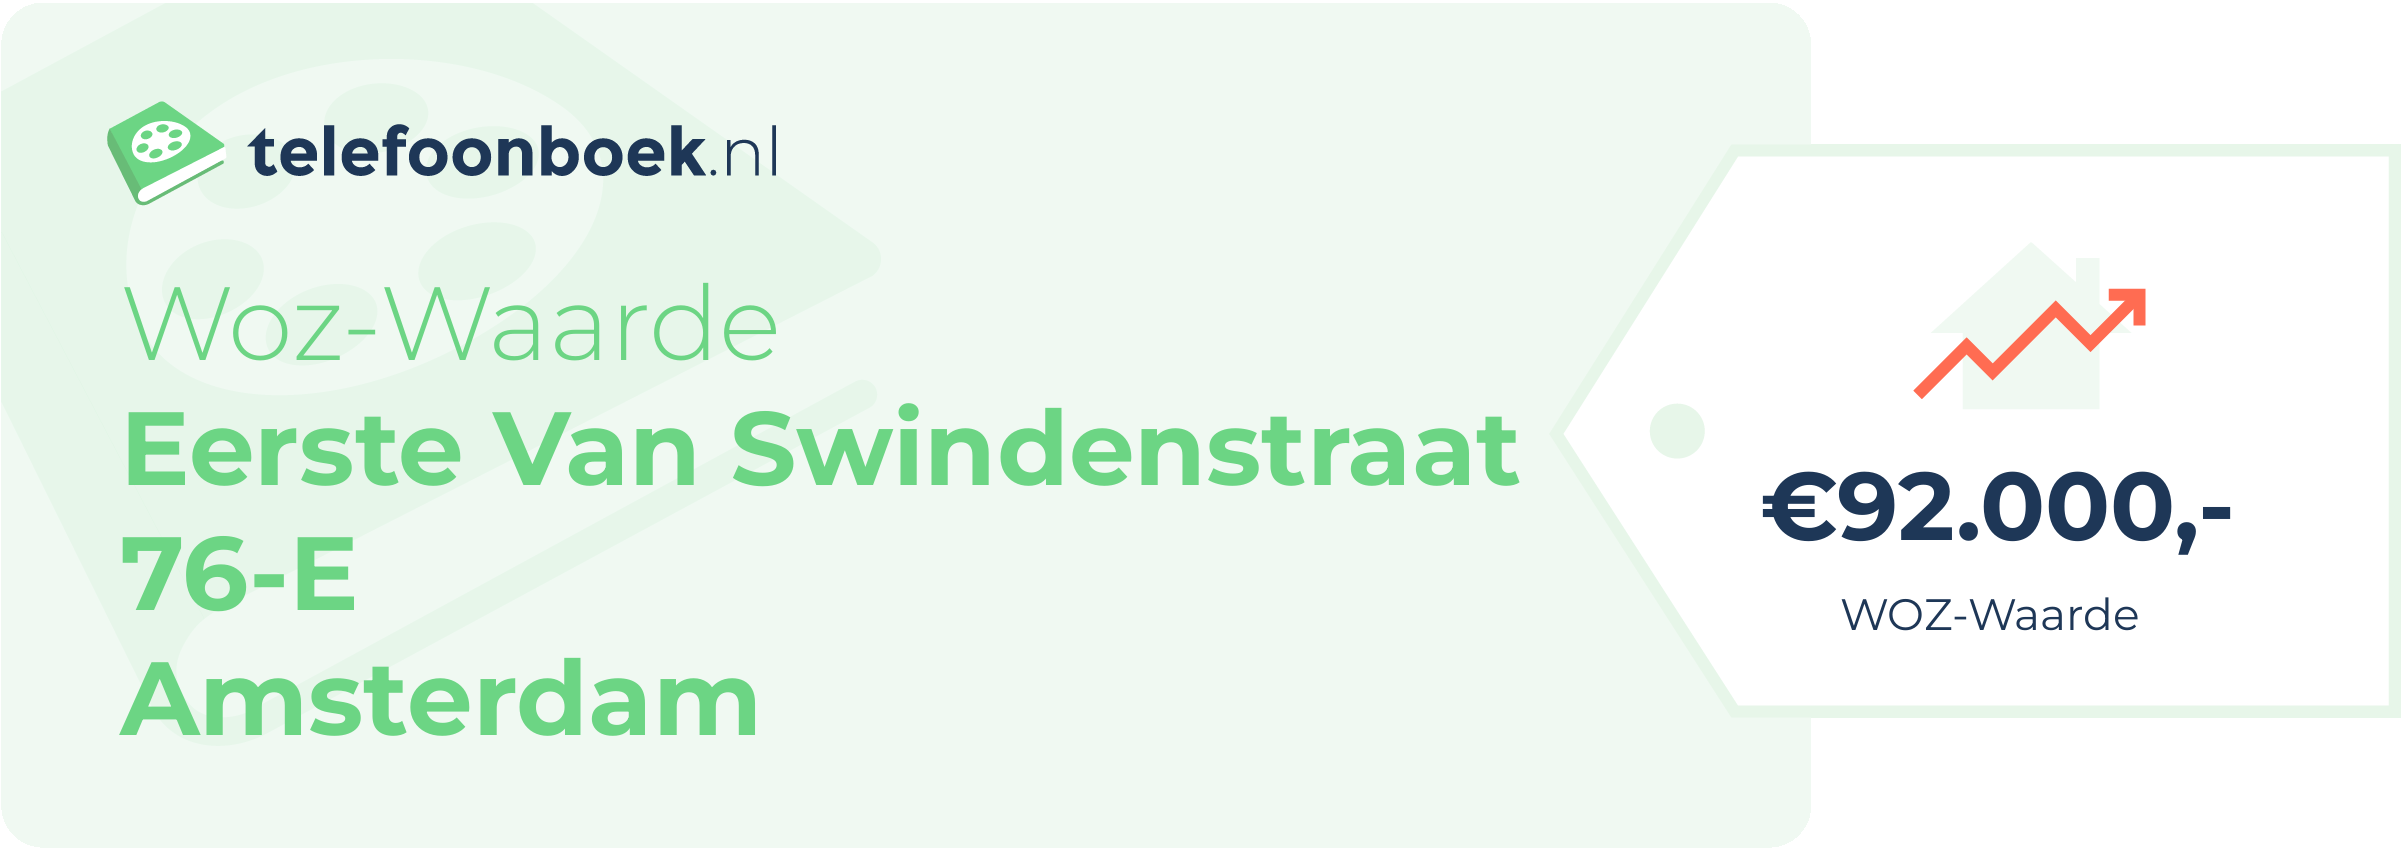 WOZ-waarde Eerste Van Swindenstraat 76-E Amsterdam